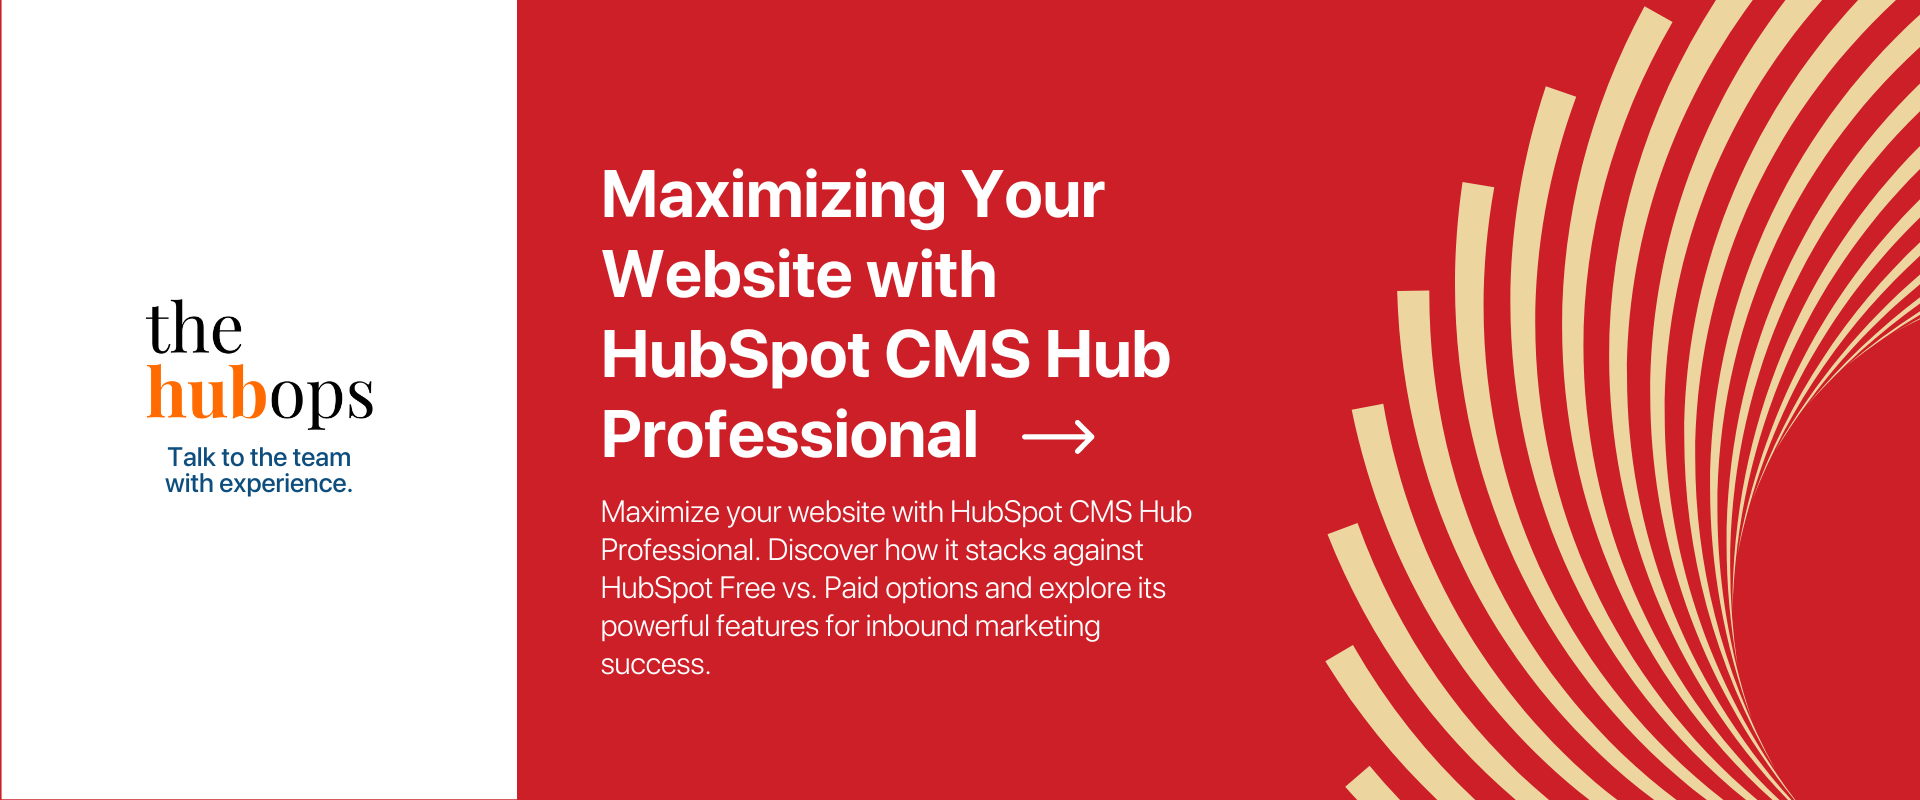 HubSpot CMS Hub Professional - The HubOps